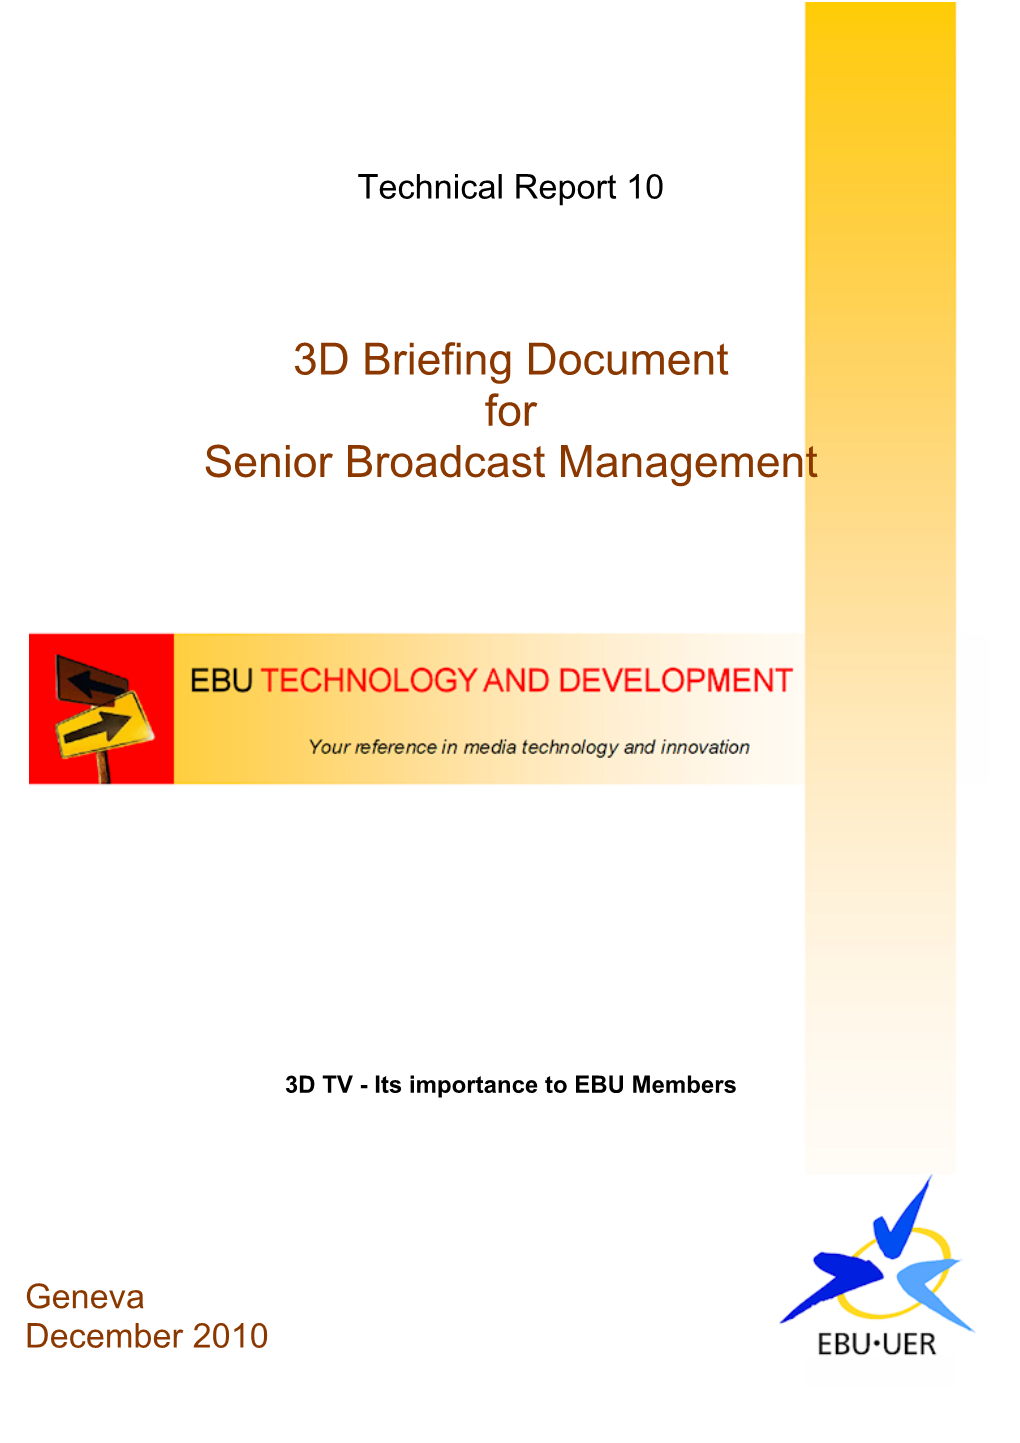 3D Briefing Document for Senior Broadcast Management